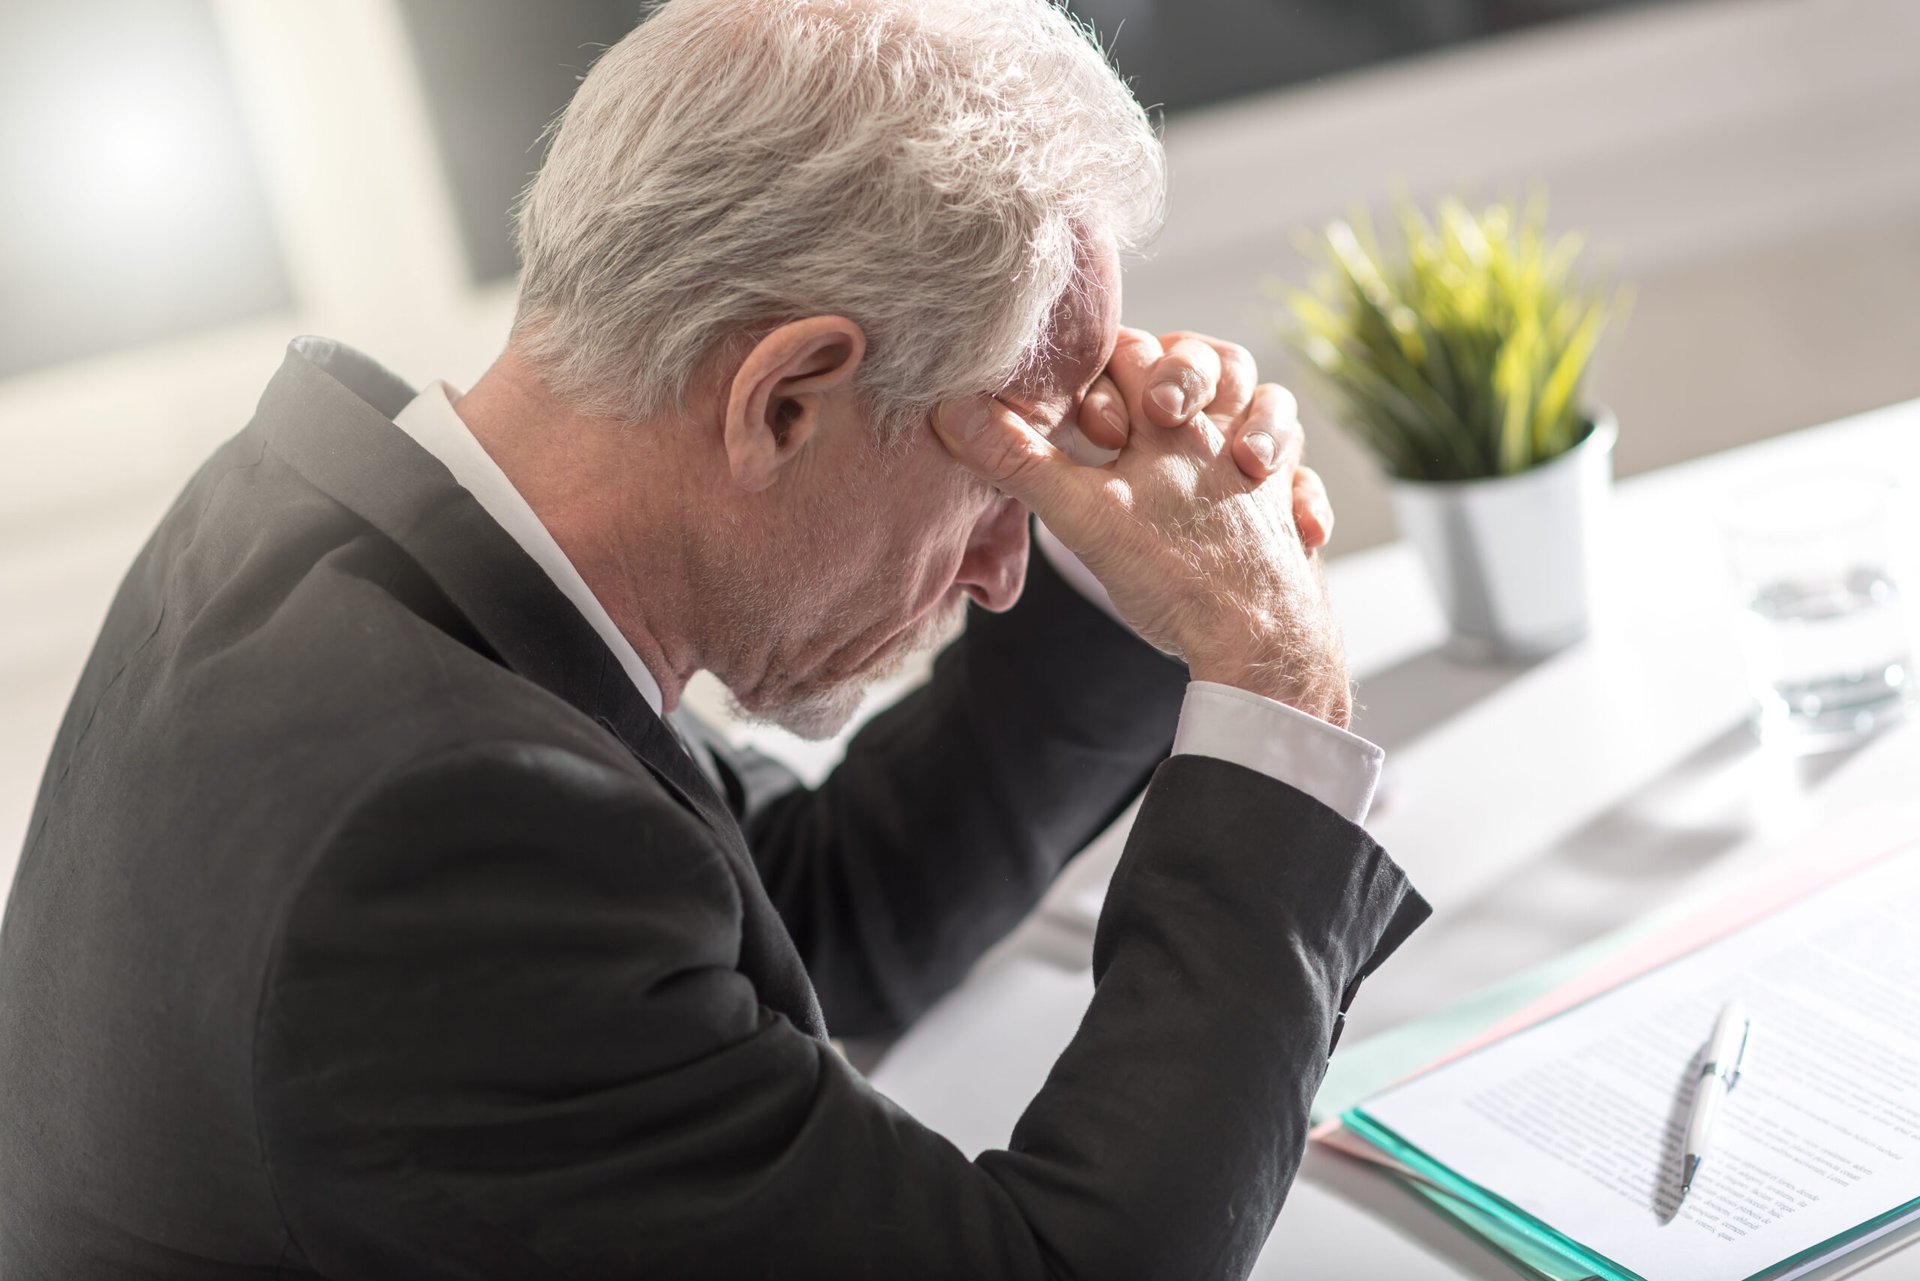 Stressed senior man worried about retirement finances